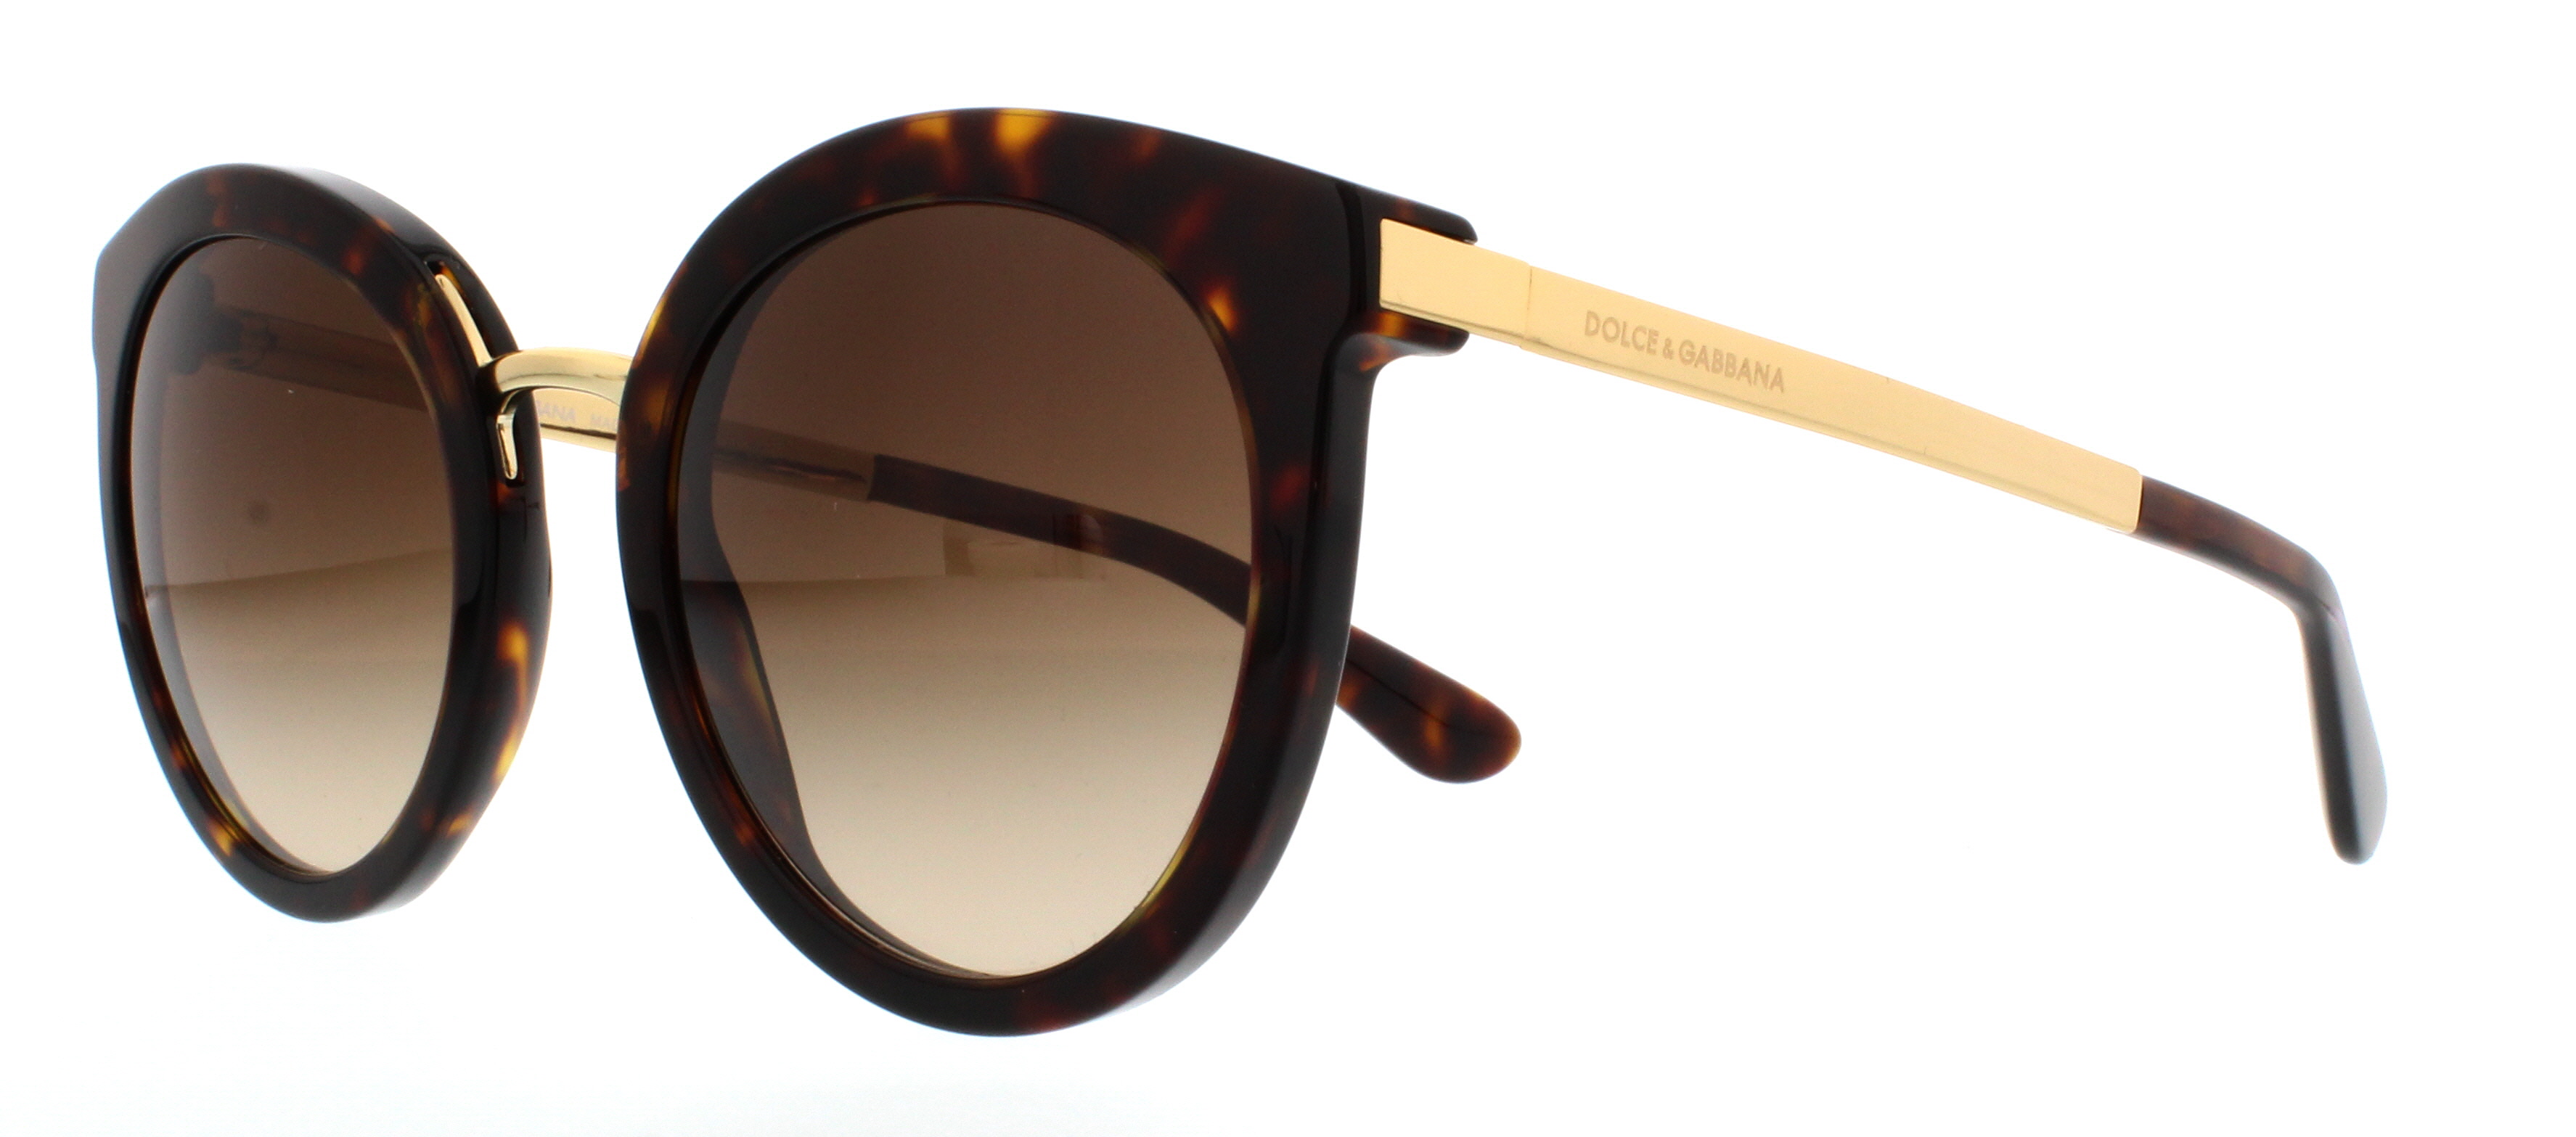 Designer Frames Outlet. Dolce & Gabbana Sunglasses DG4268